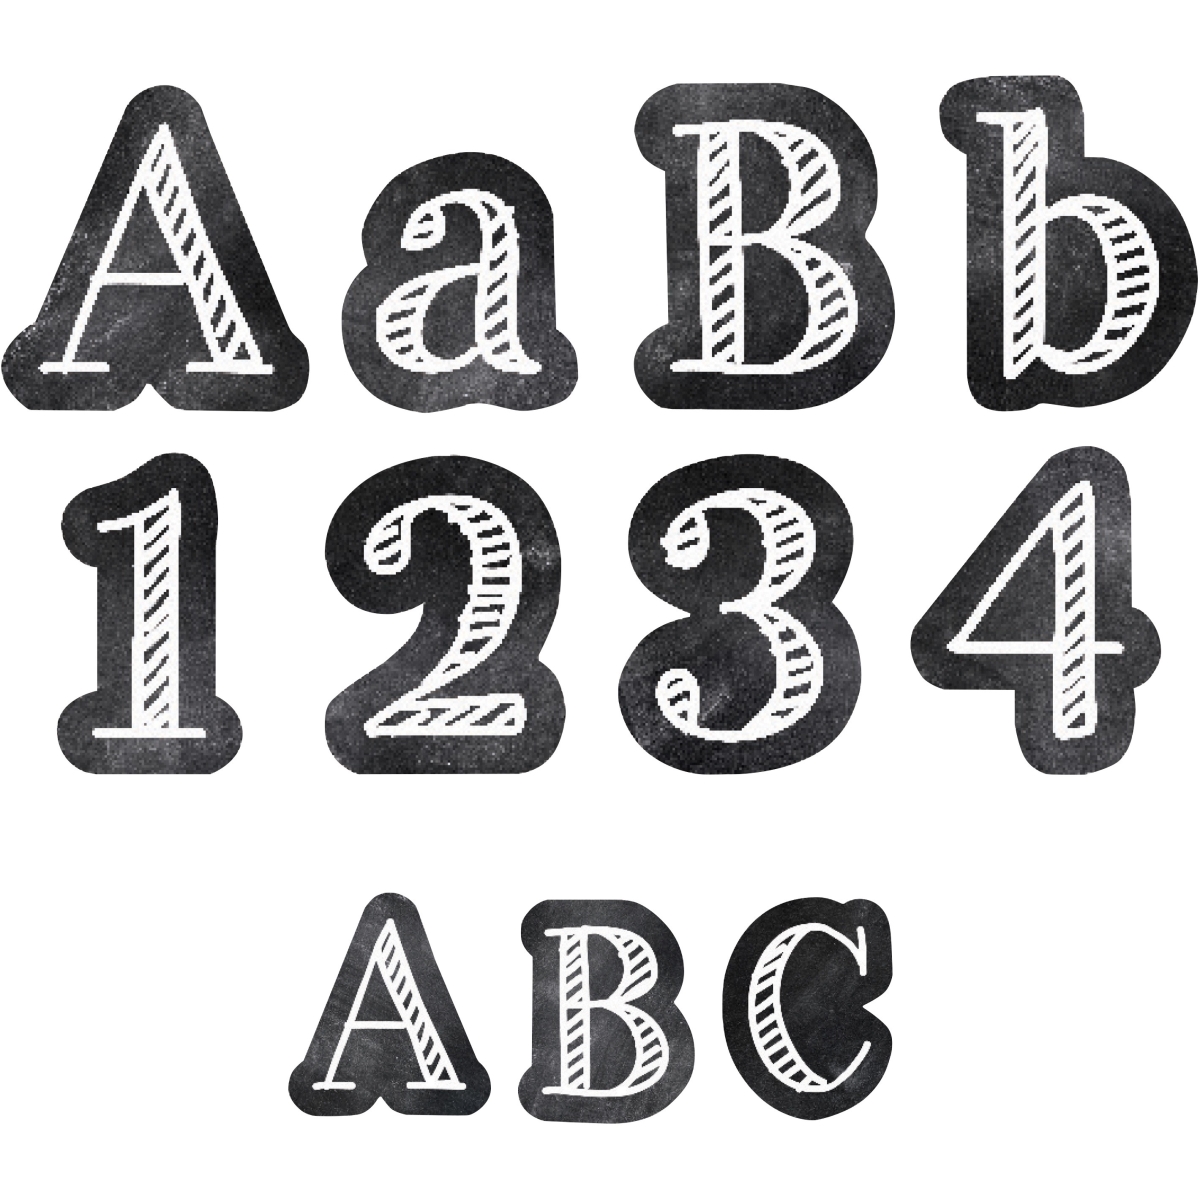 Ctc8913 4 In. Chalk It Up Letter Set - Letter - Black & White